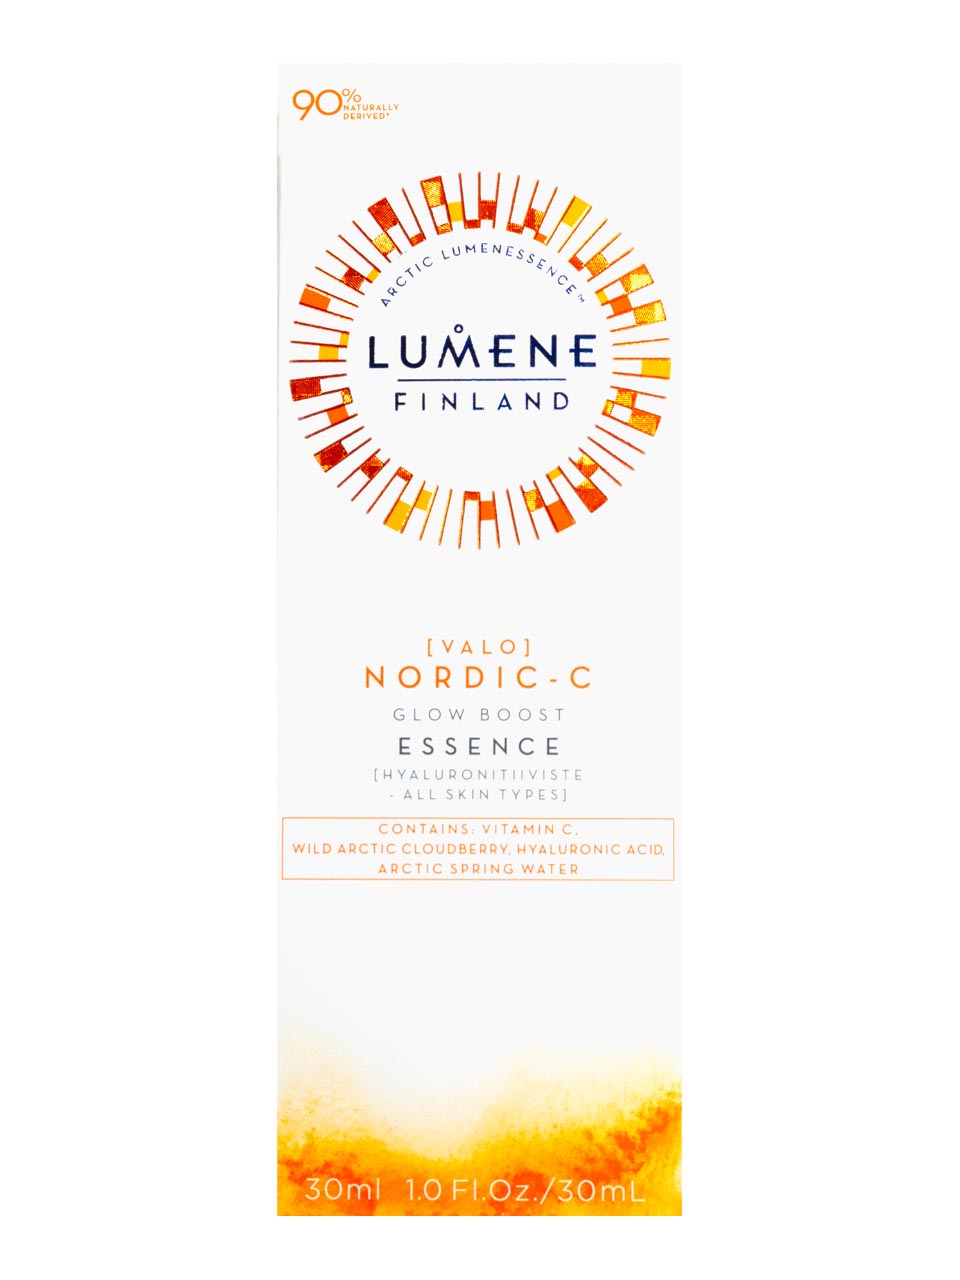 Lumene Nordic-C (Valo) Glow Boost Essence 30 ml null - onesize - 1